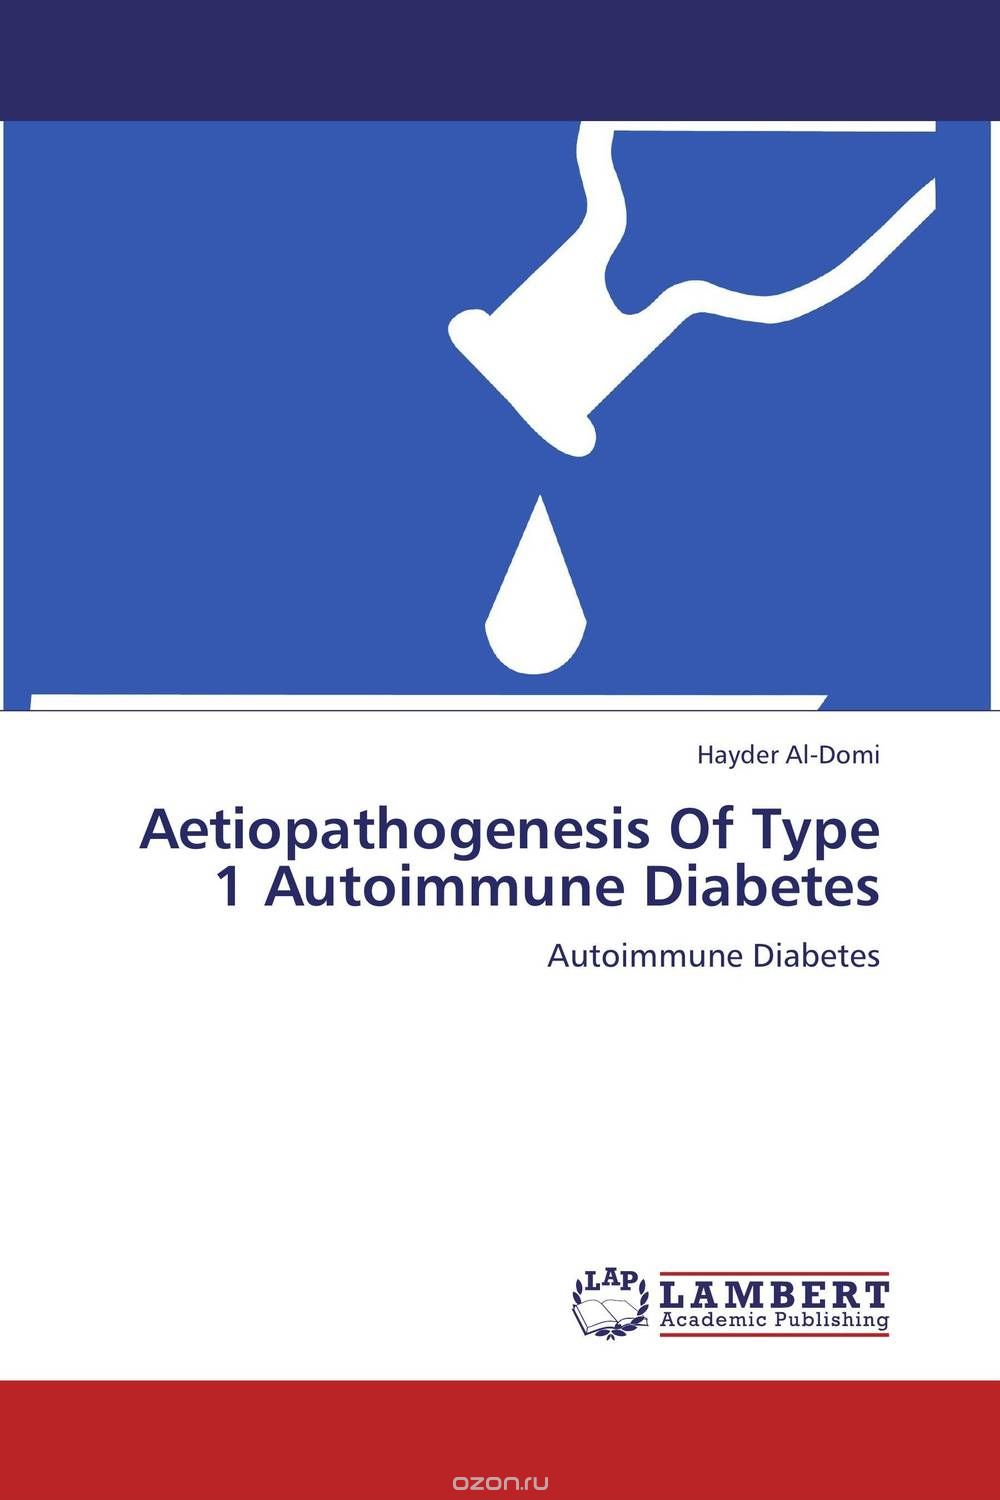 Скачать книгу "Aetiopathogenesis Of Type 1 Autoimmune Diabetes"